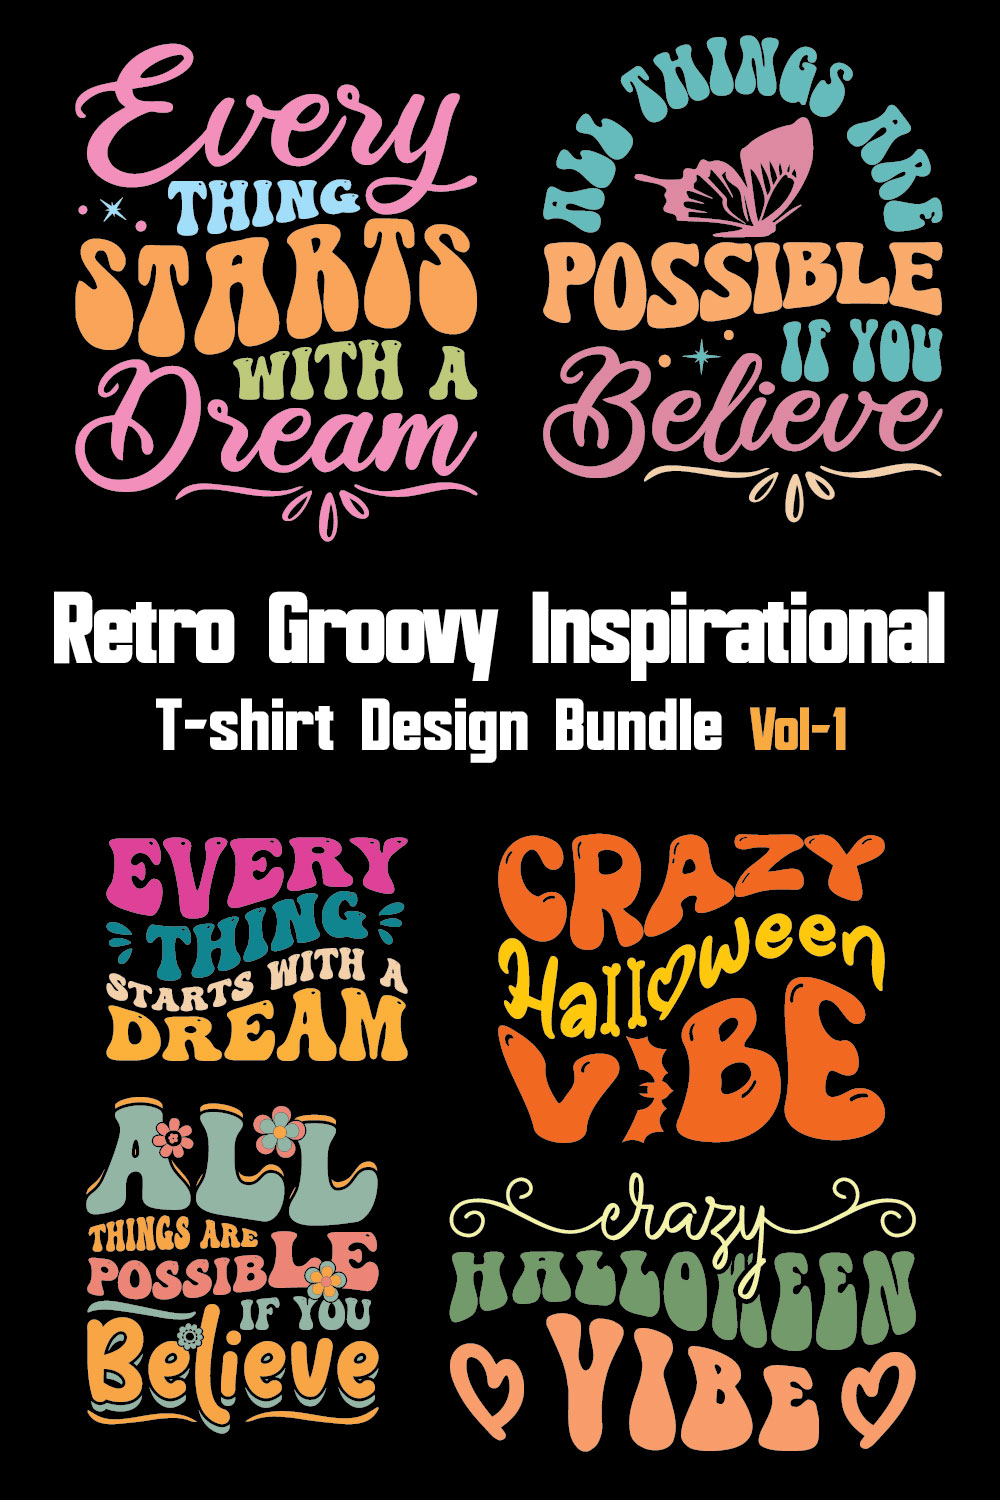 Retro Groovy Inspirational T-shirt Design Bundle Vol-1 pinterest preview image.